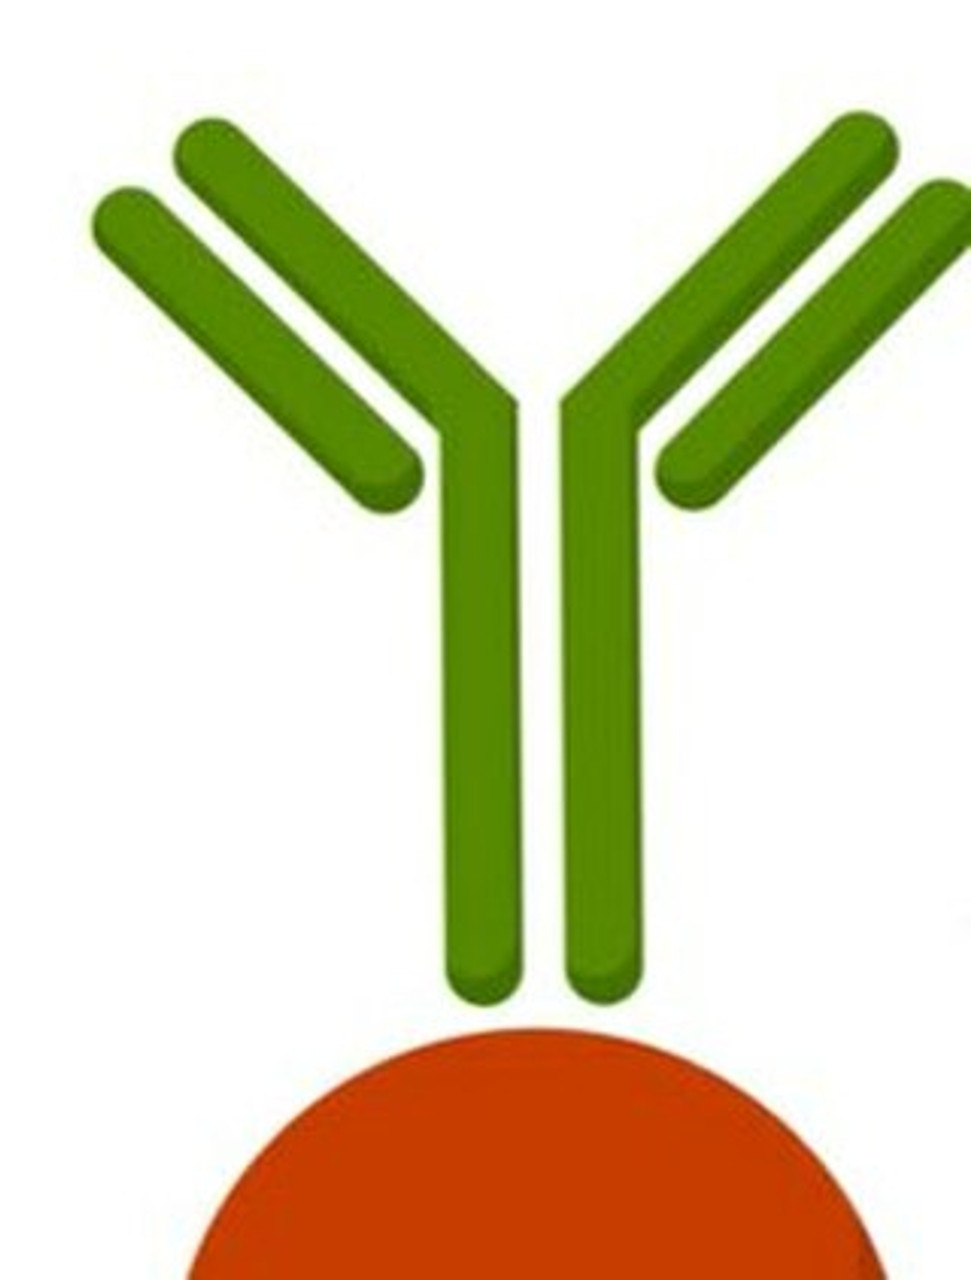 ELF1 Antibody